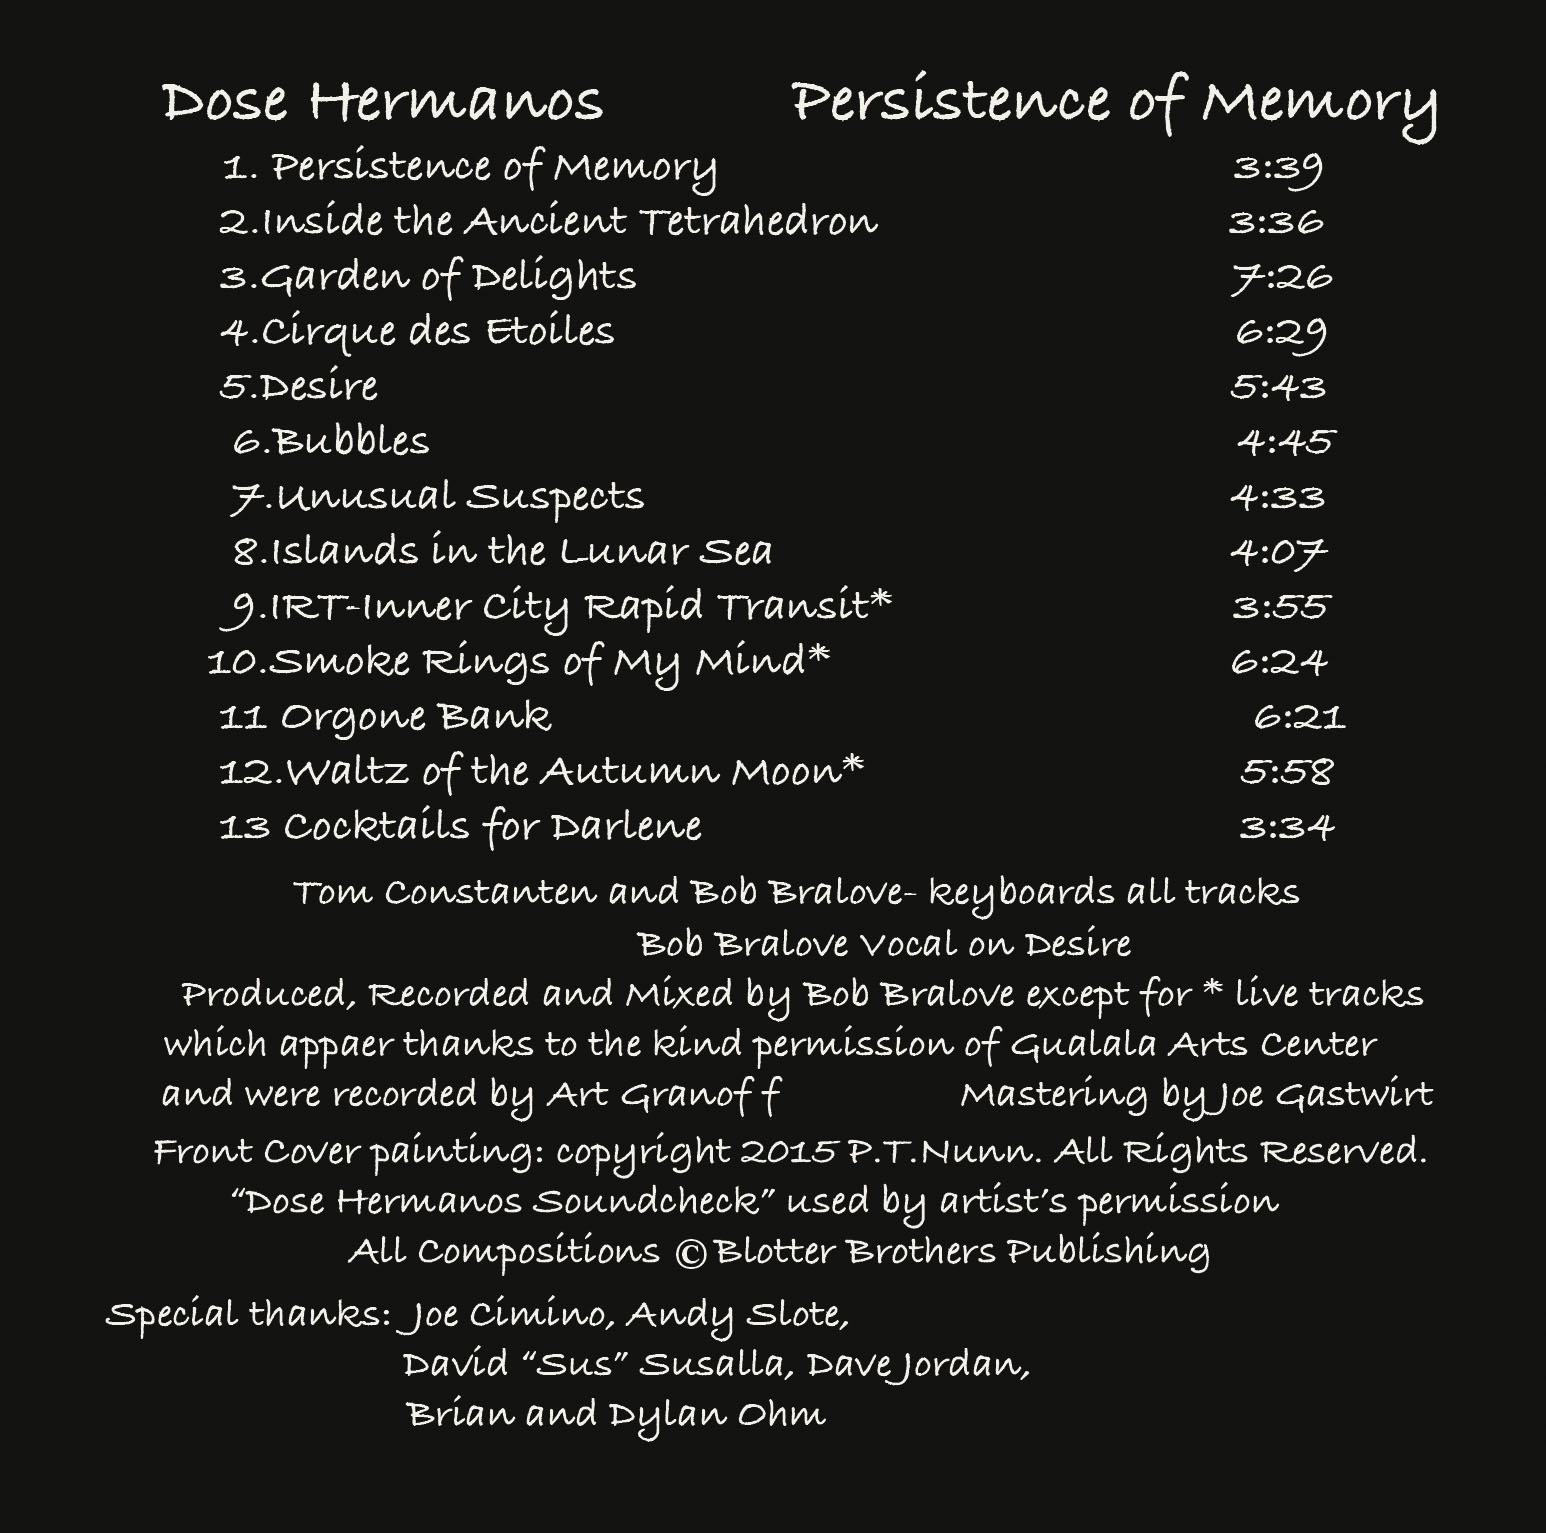 Dose Hermanos: Persistence of Memory